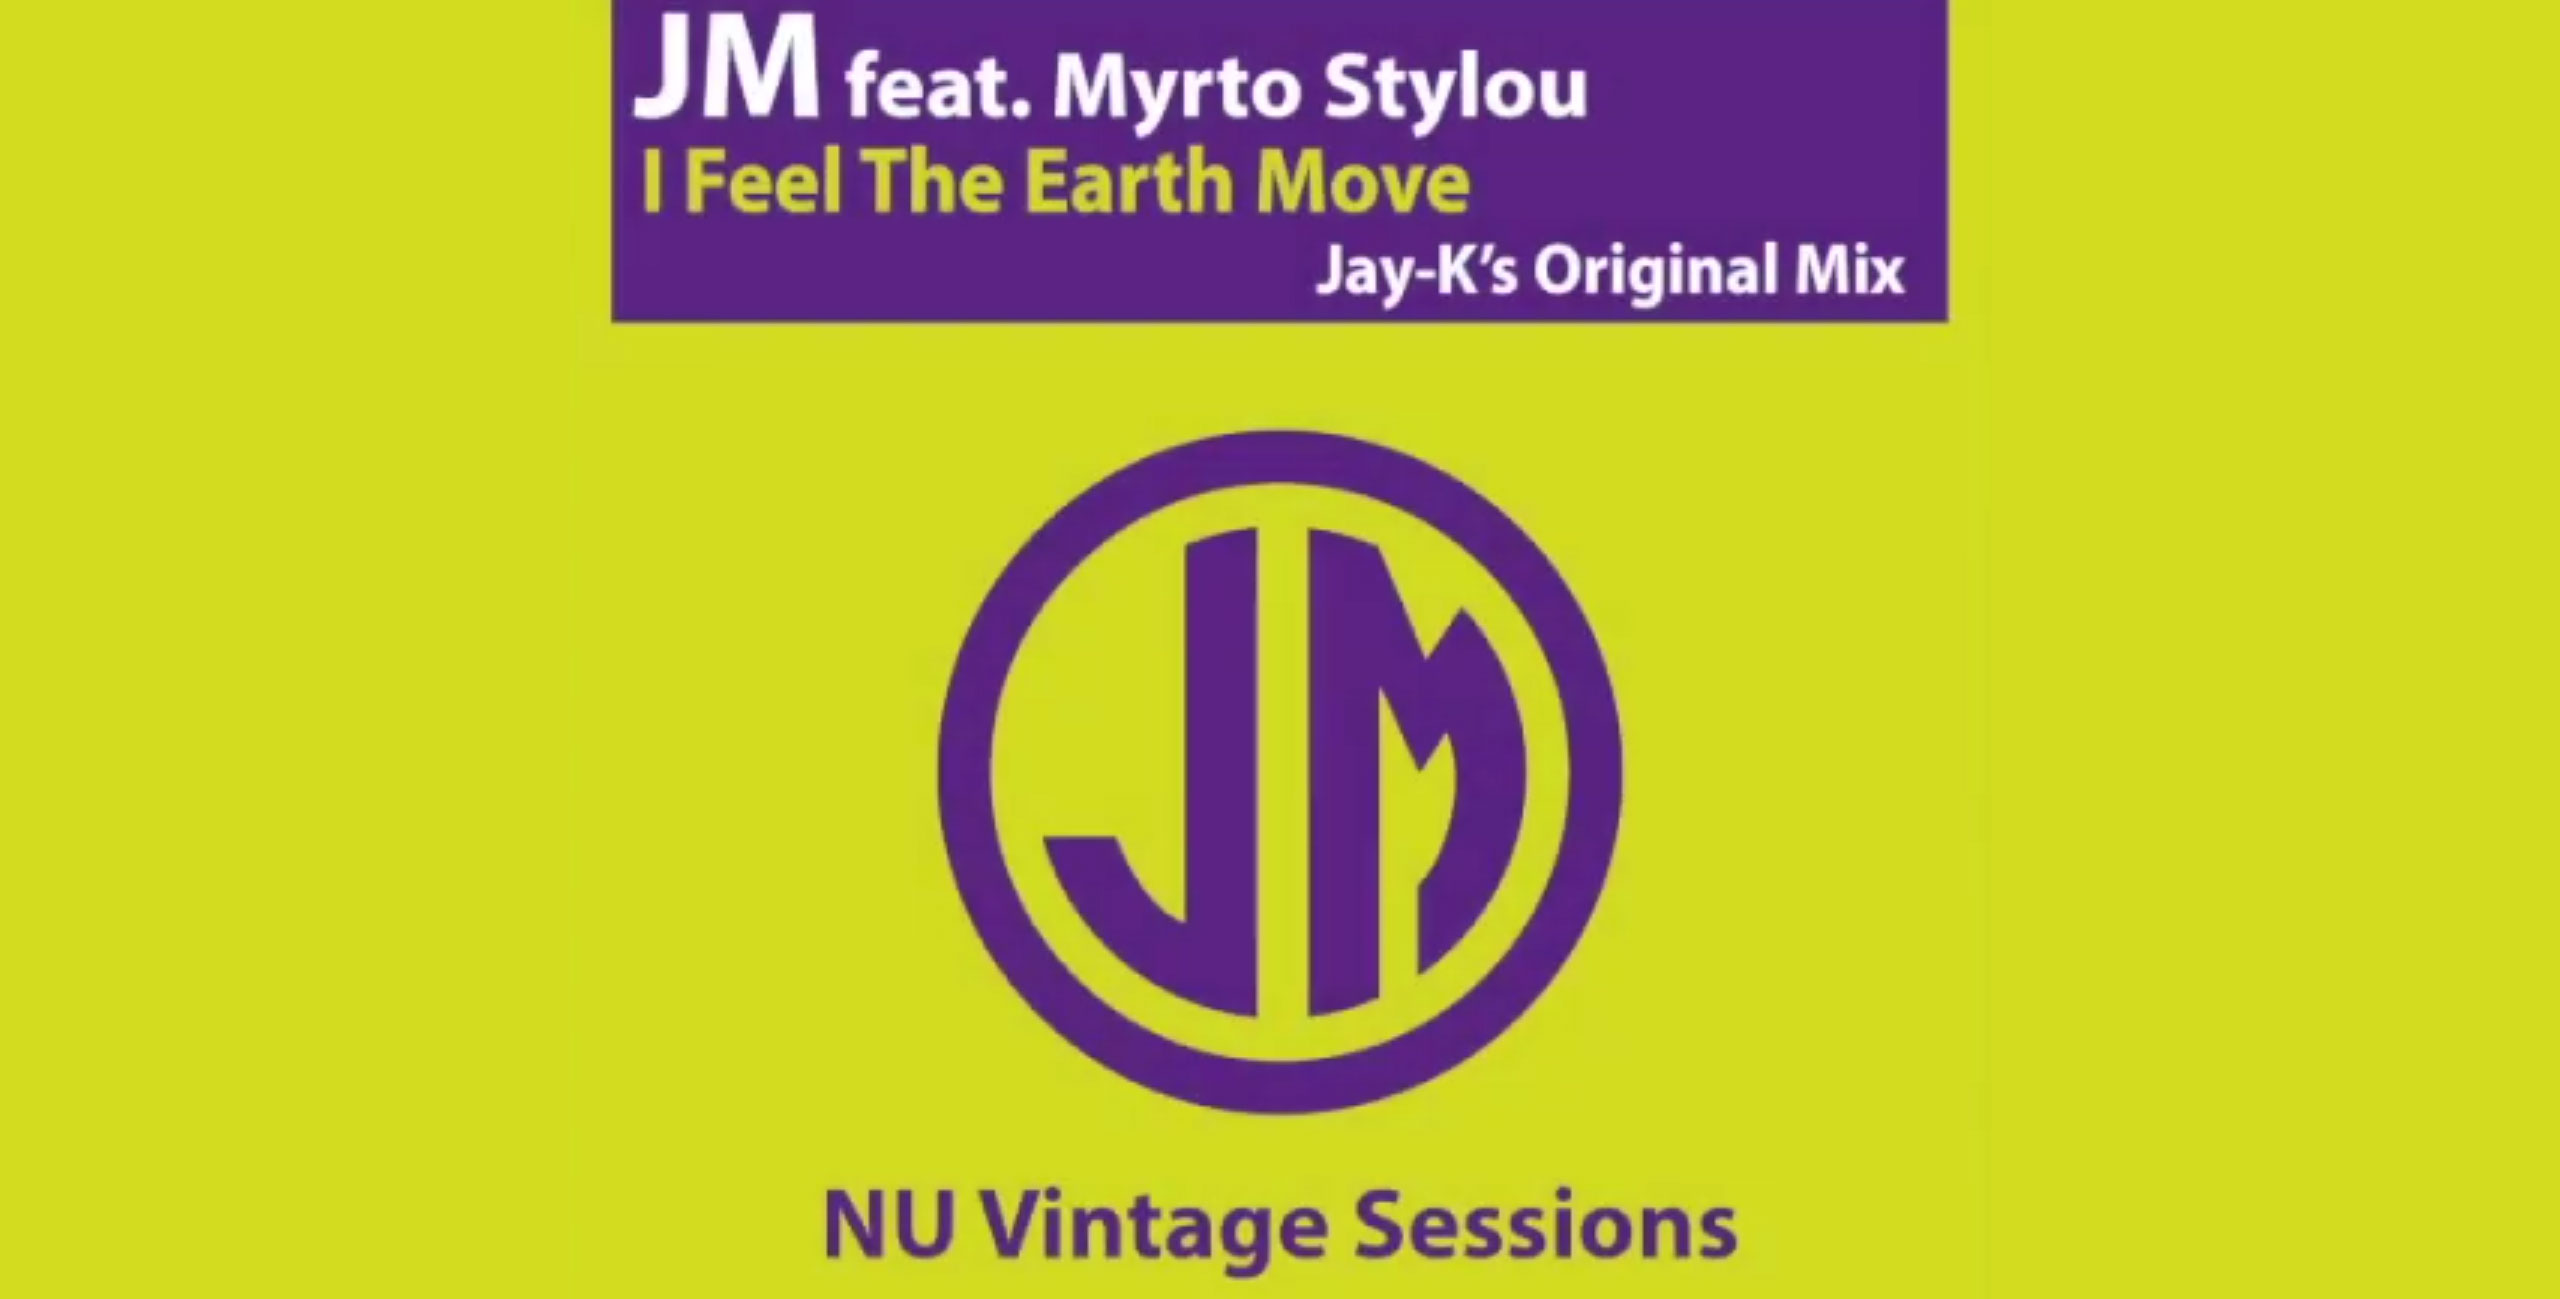 JM feat. Myrto Stylou - I Feel The Earth Move (Jay-K's Original Mix)